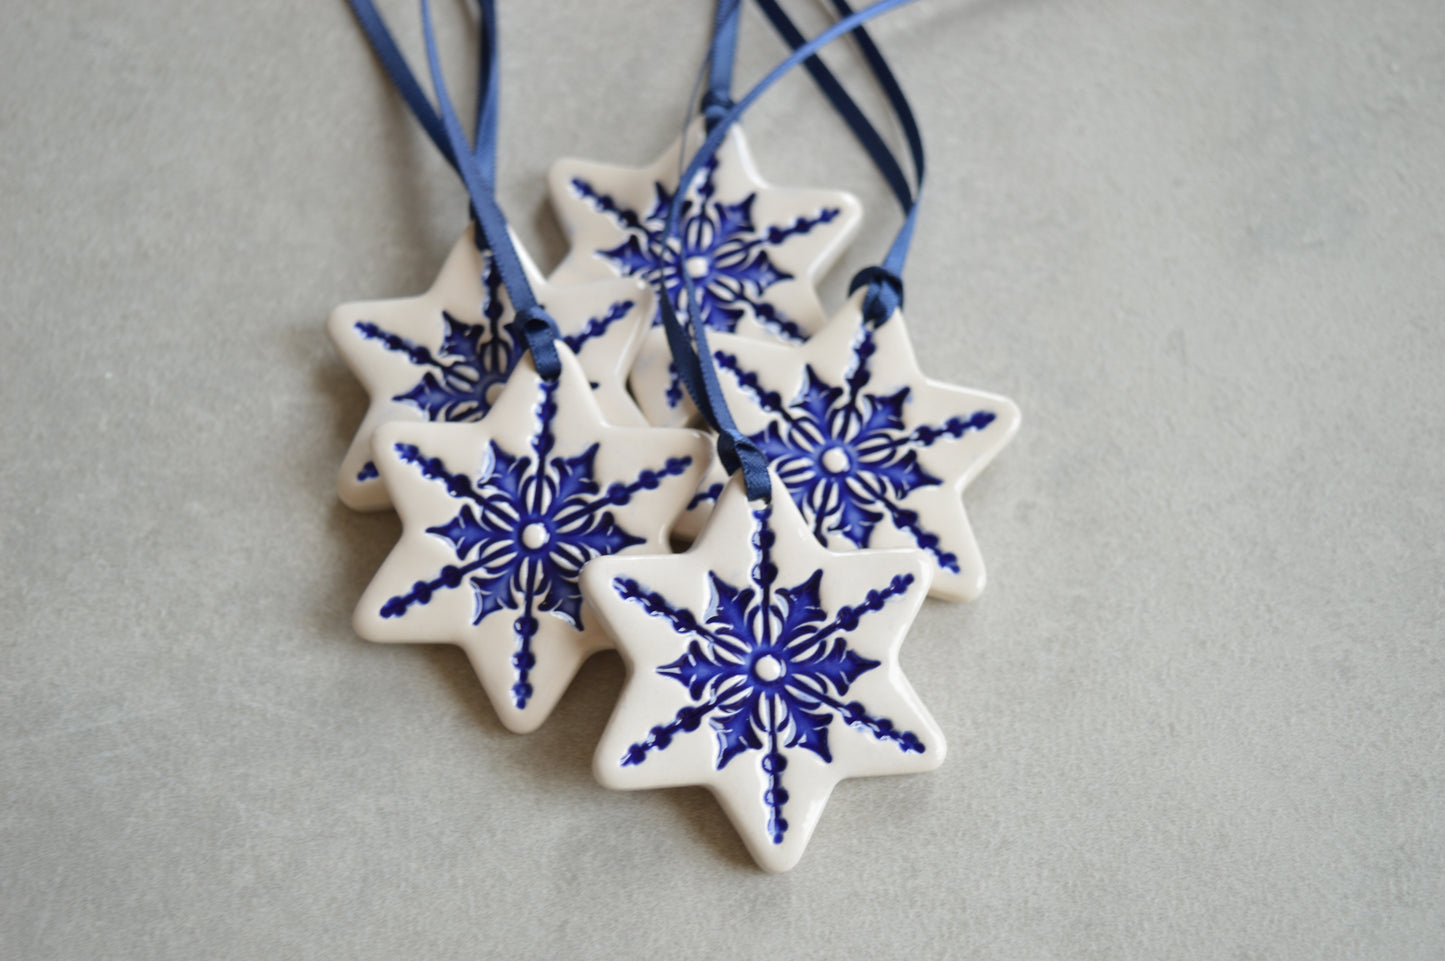 Ceramic star ornaments // Christmas decorations - set of 5